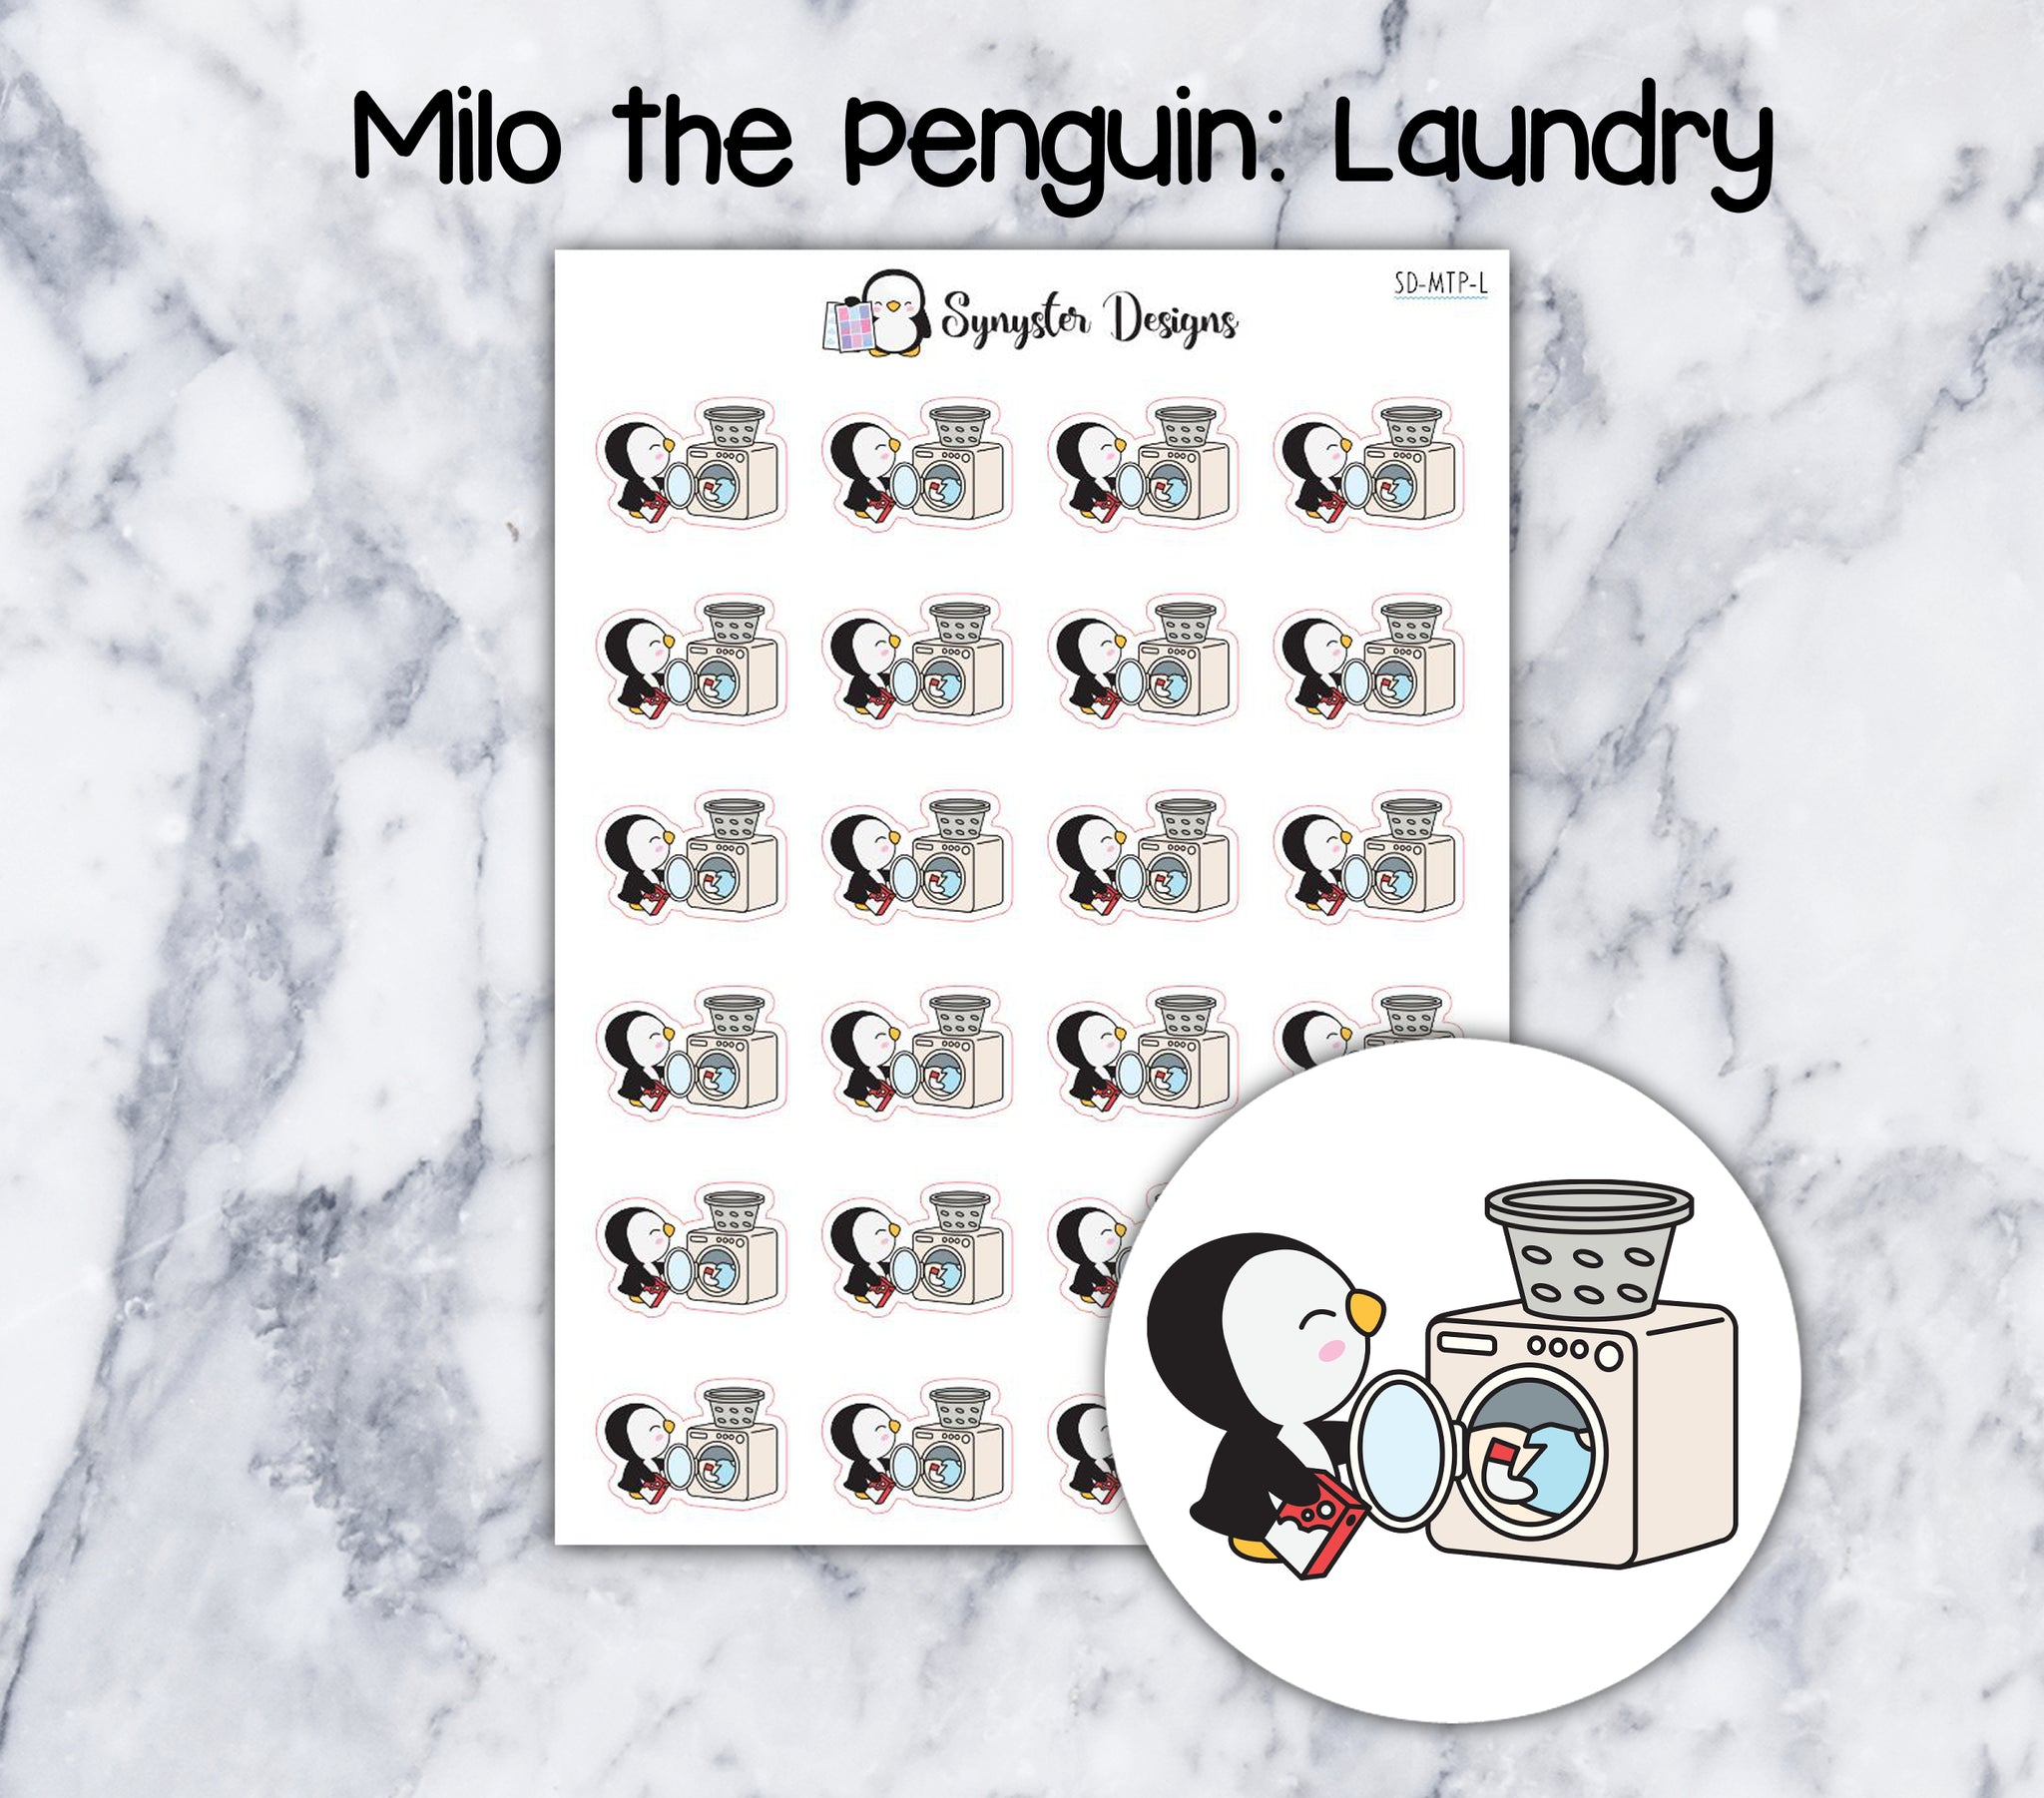 Laundry Milo the Penguin